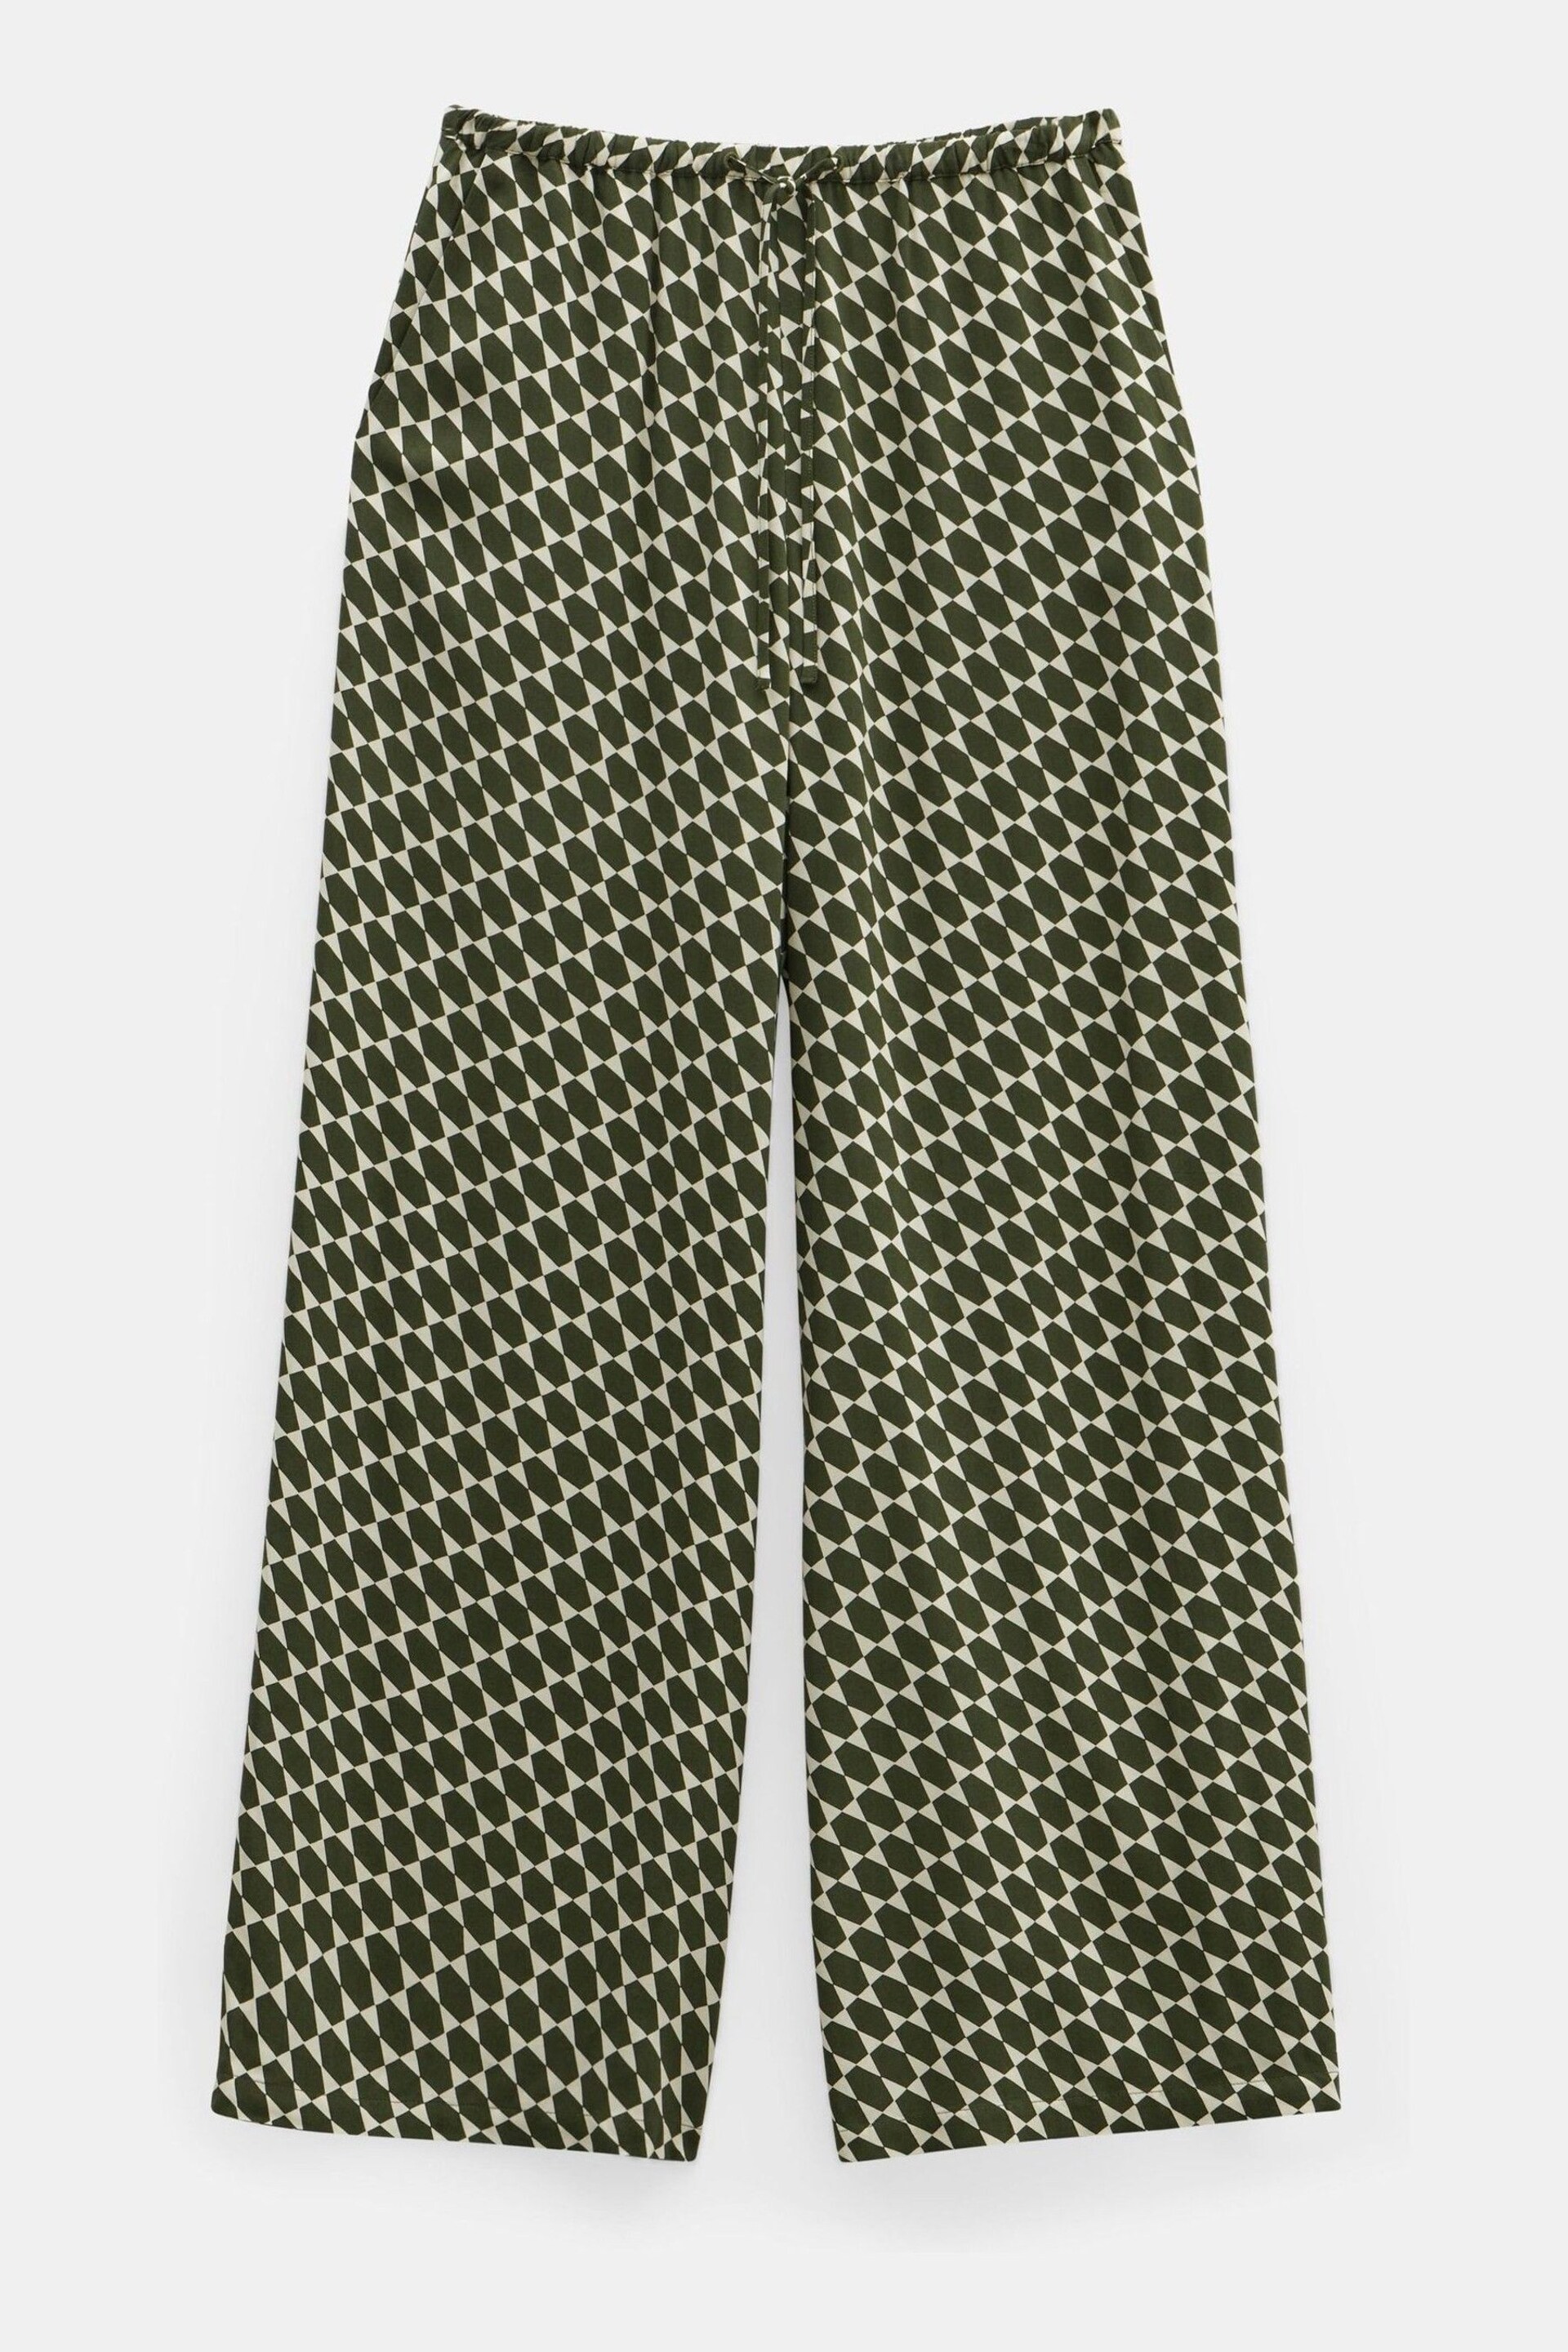 Hush Green Norah Printed Wide Leg Trousers - Image 5 of 5